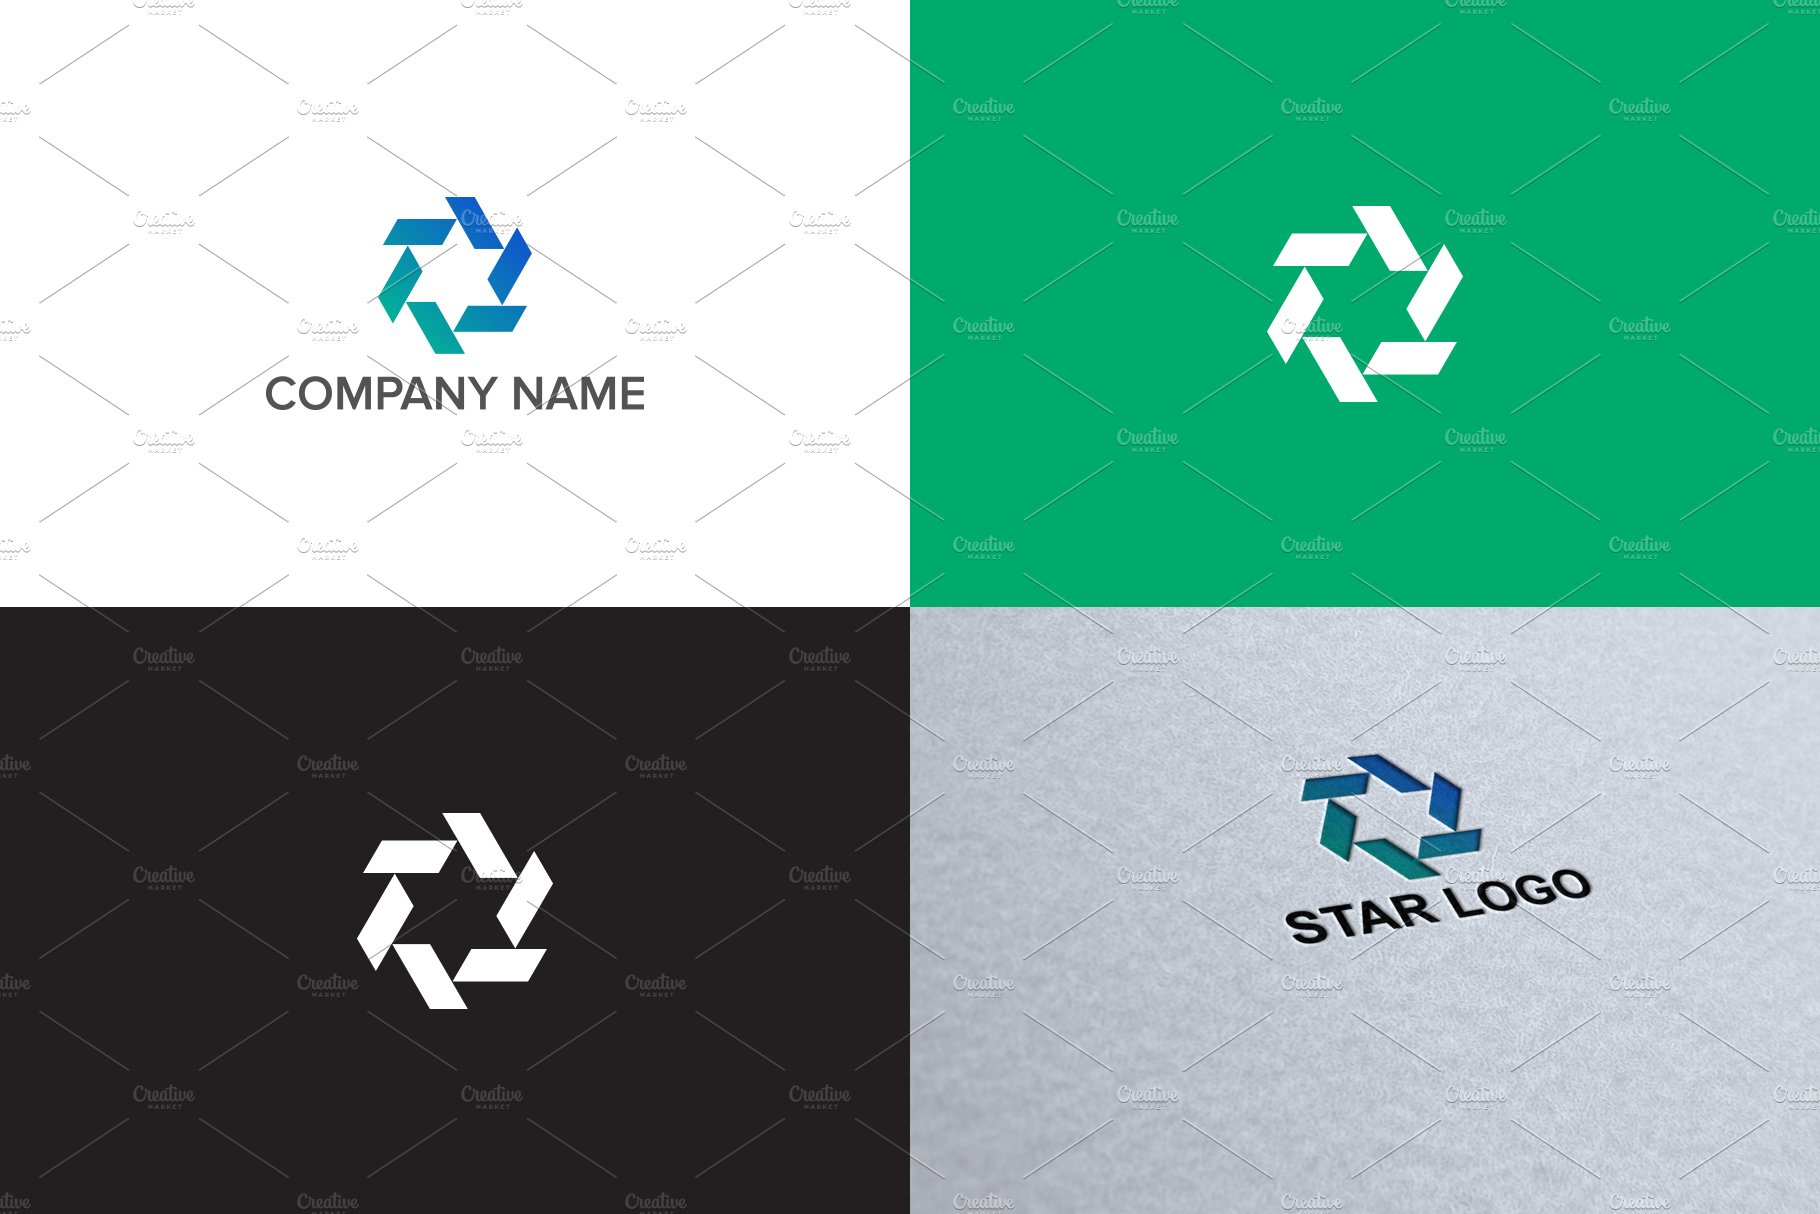 Star logo design preview image.